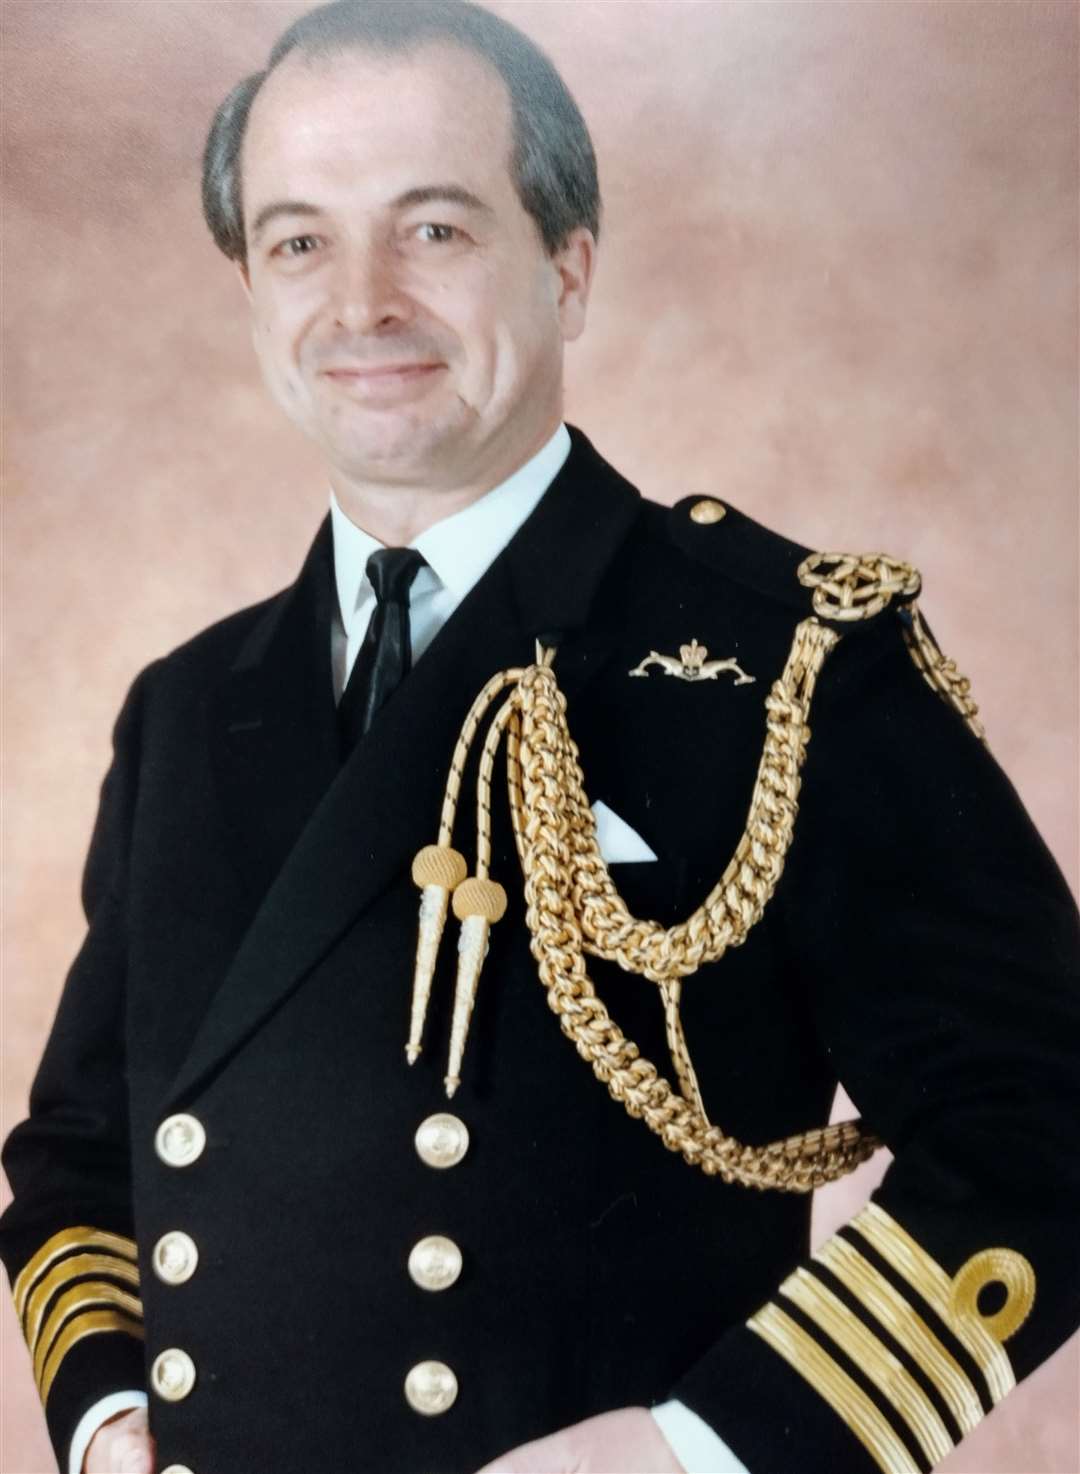 Captain Colin Farley-Sutton in uniform.